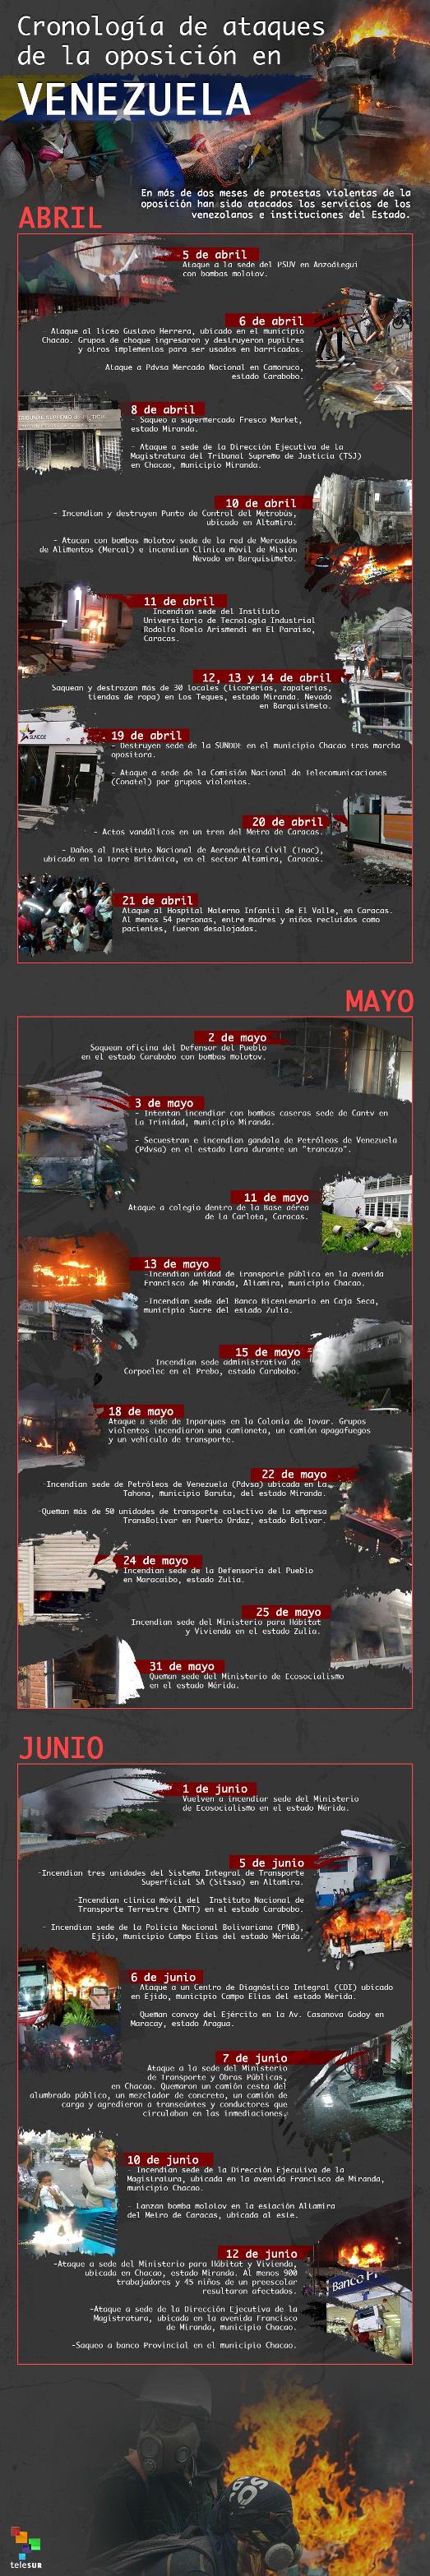 venezuela cronologia ataques derecha